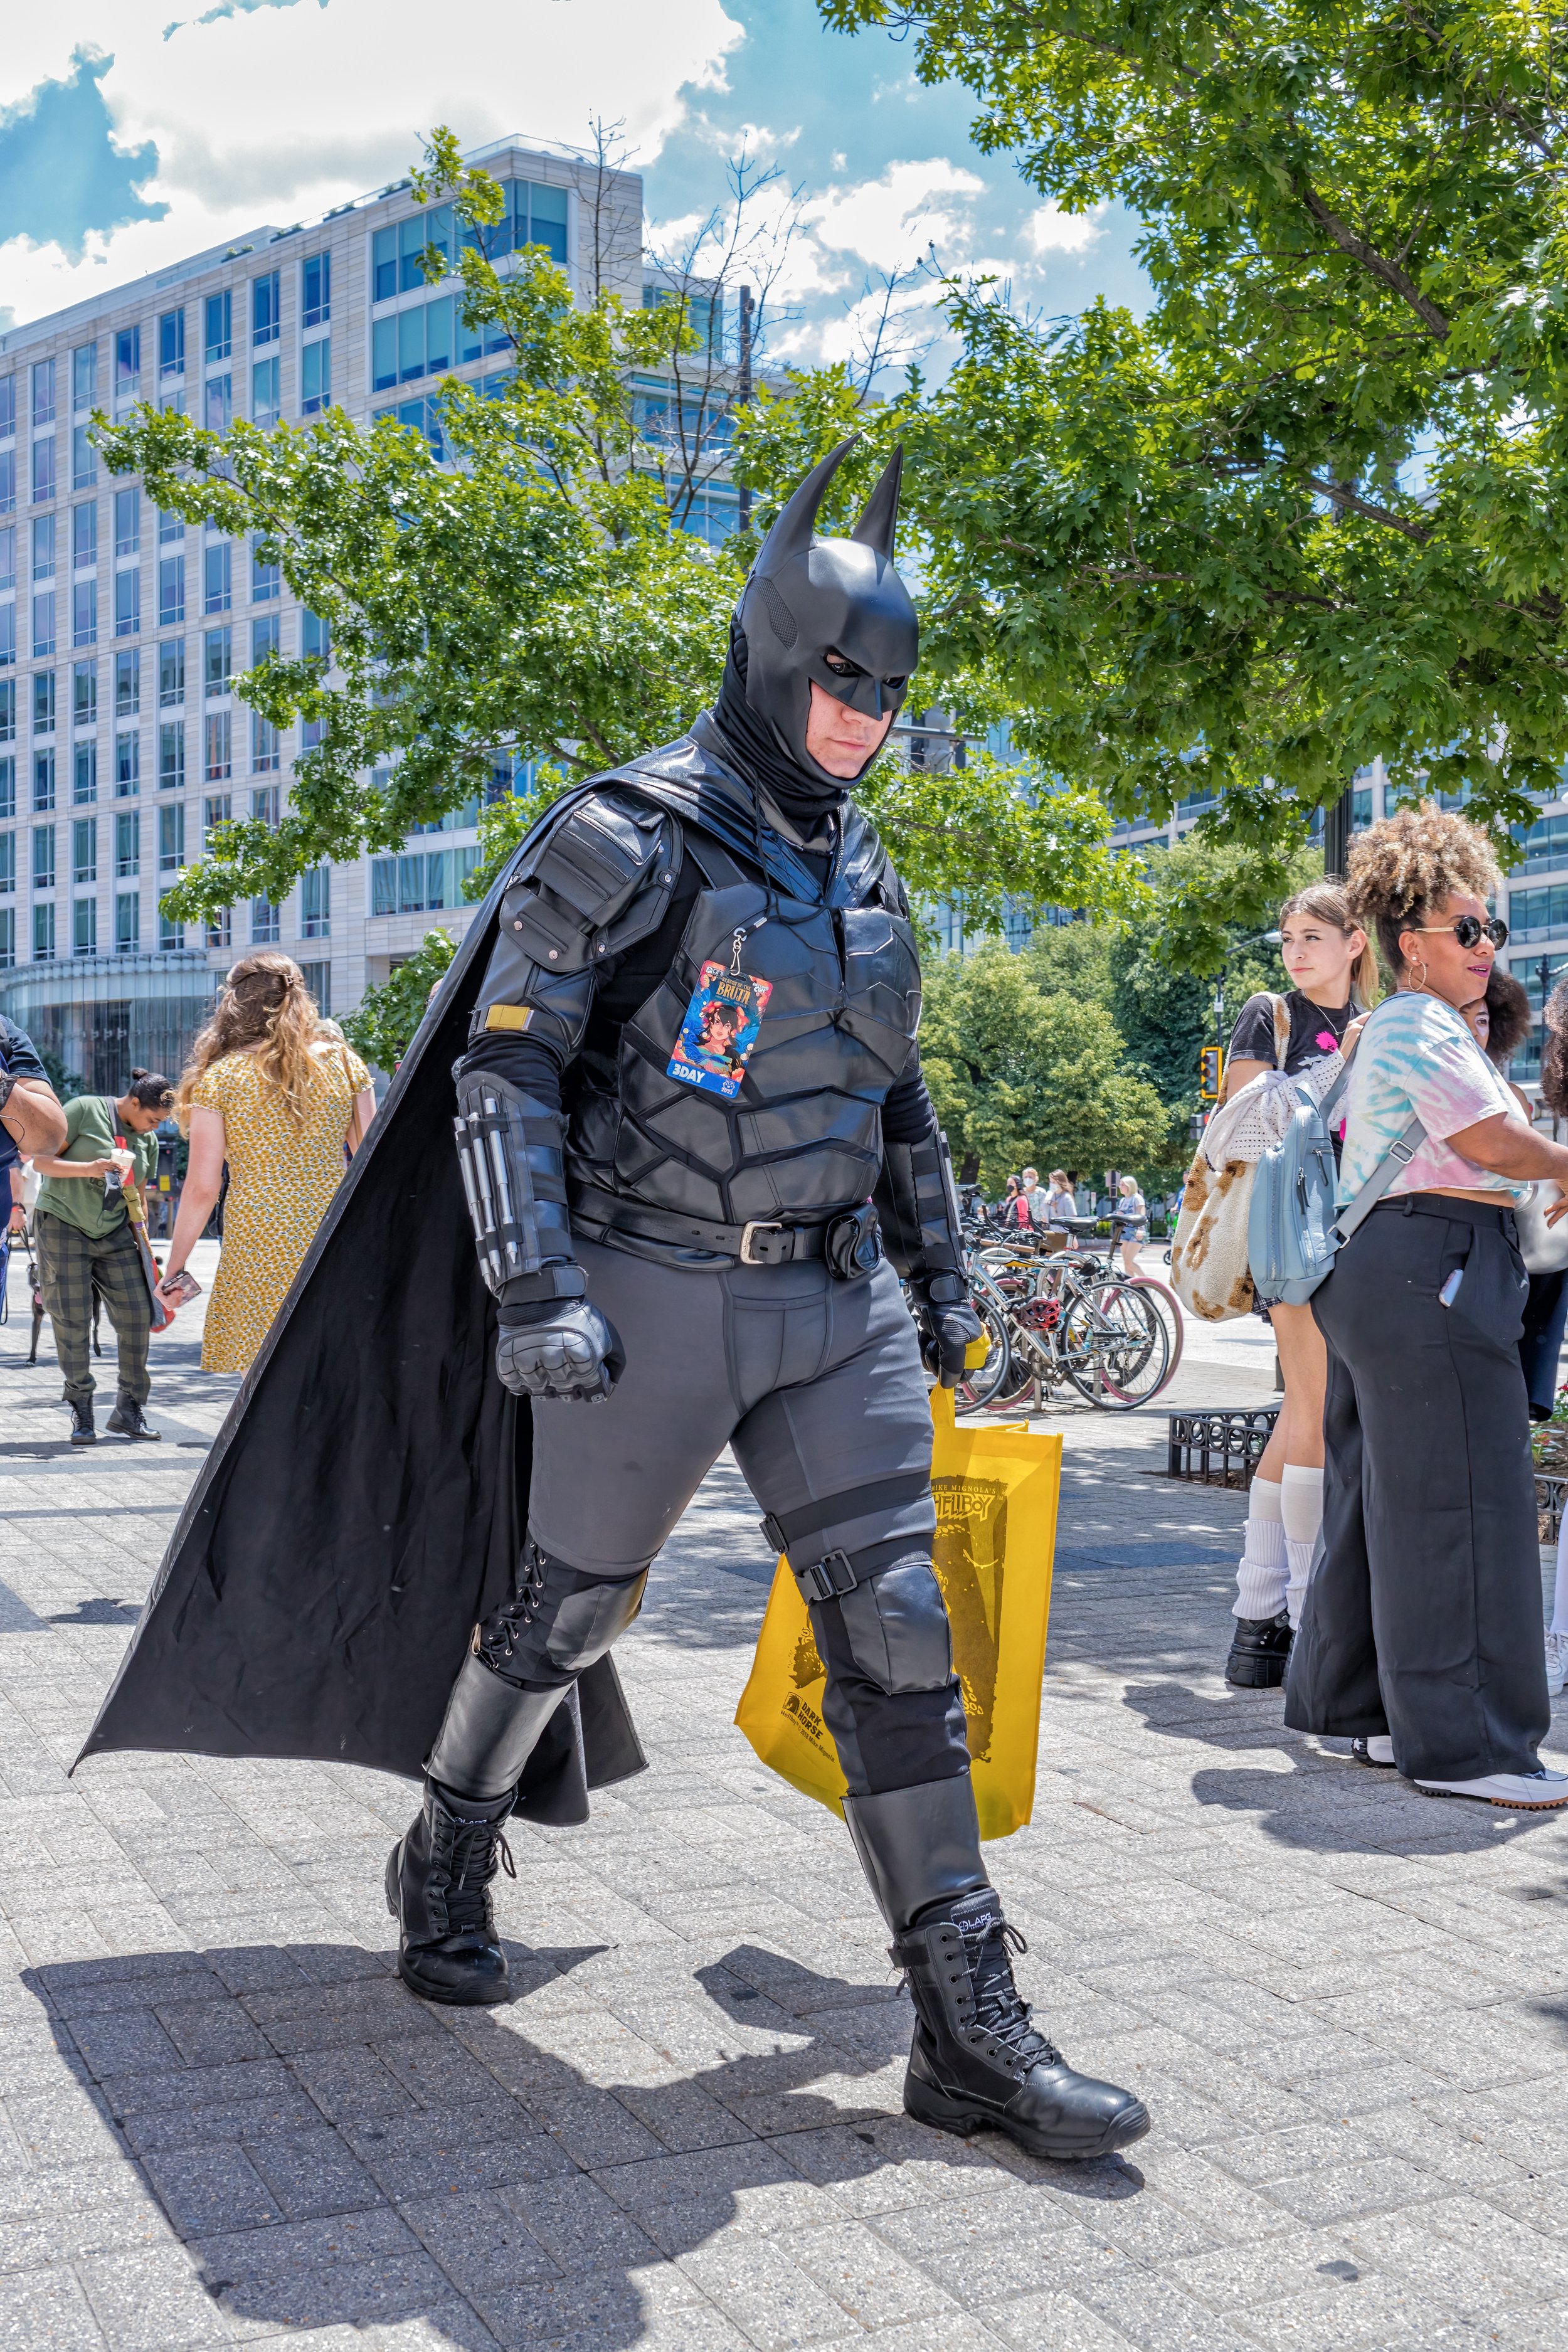 Batman. Washington, D.C. (June 2022)